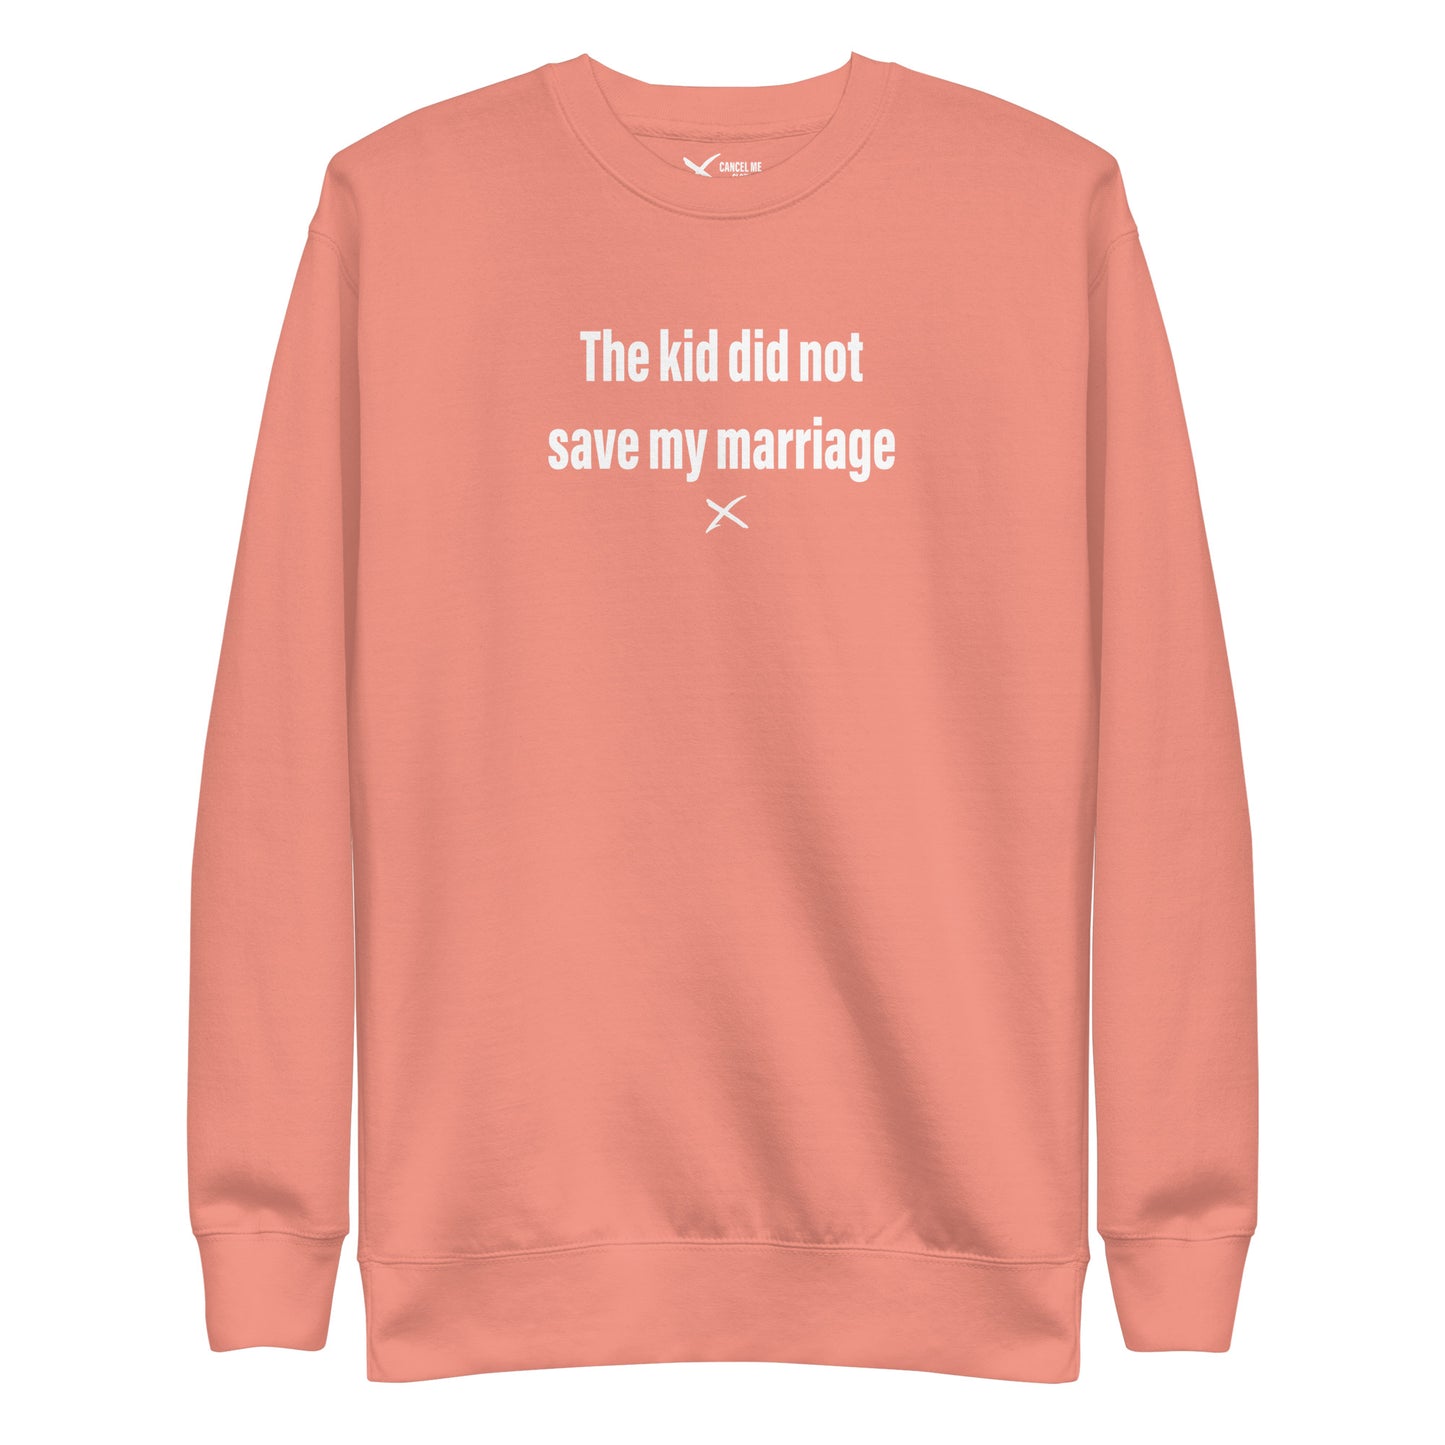 The kid did not save my marriage - Sweatshirt